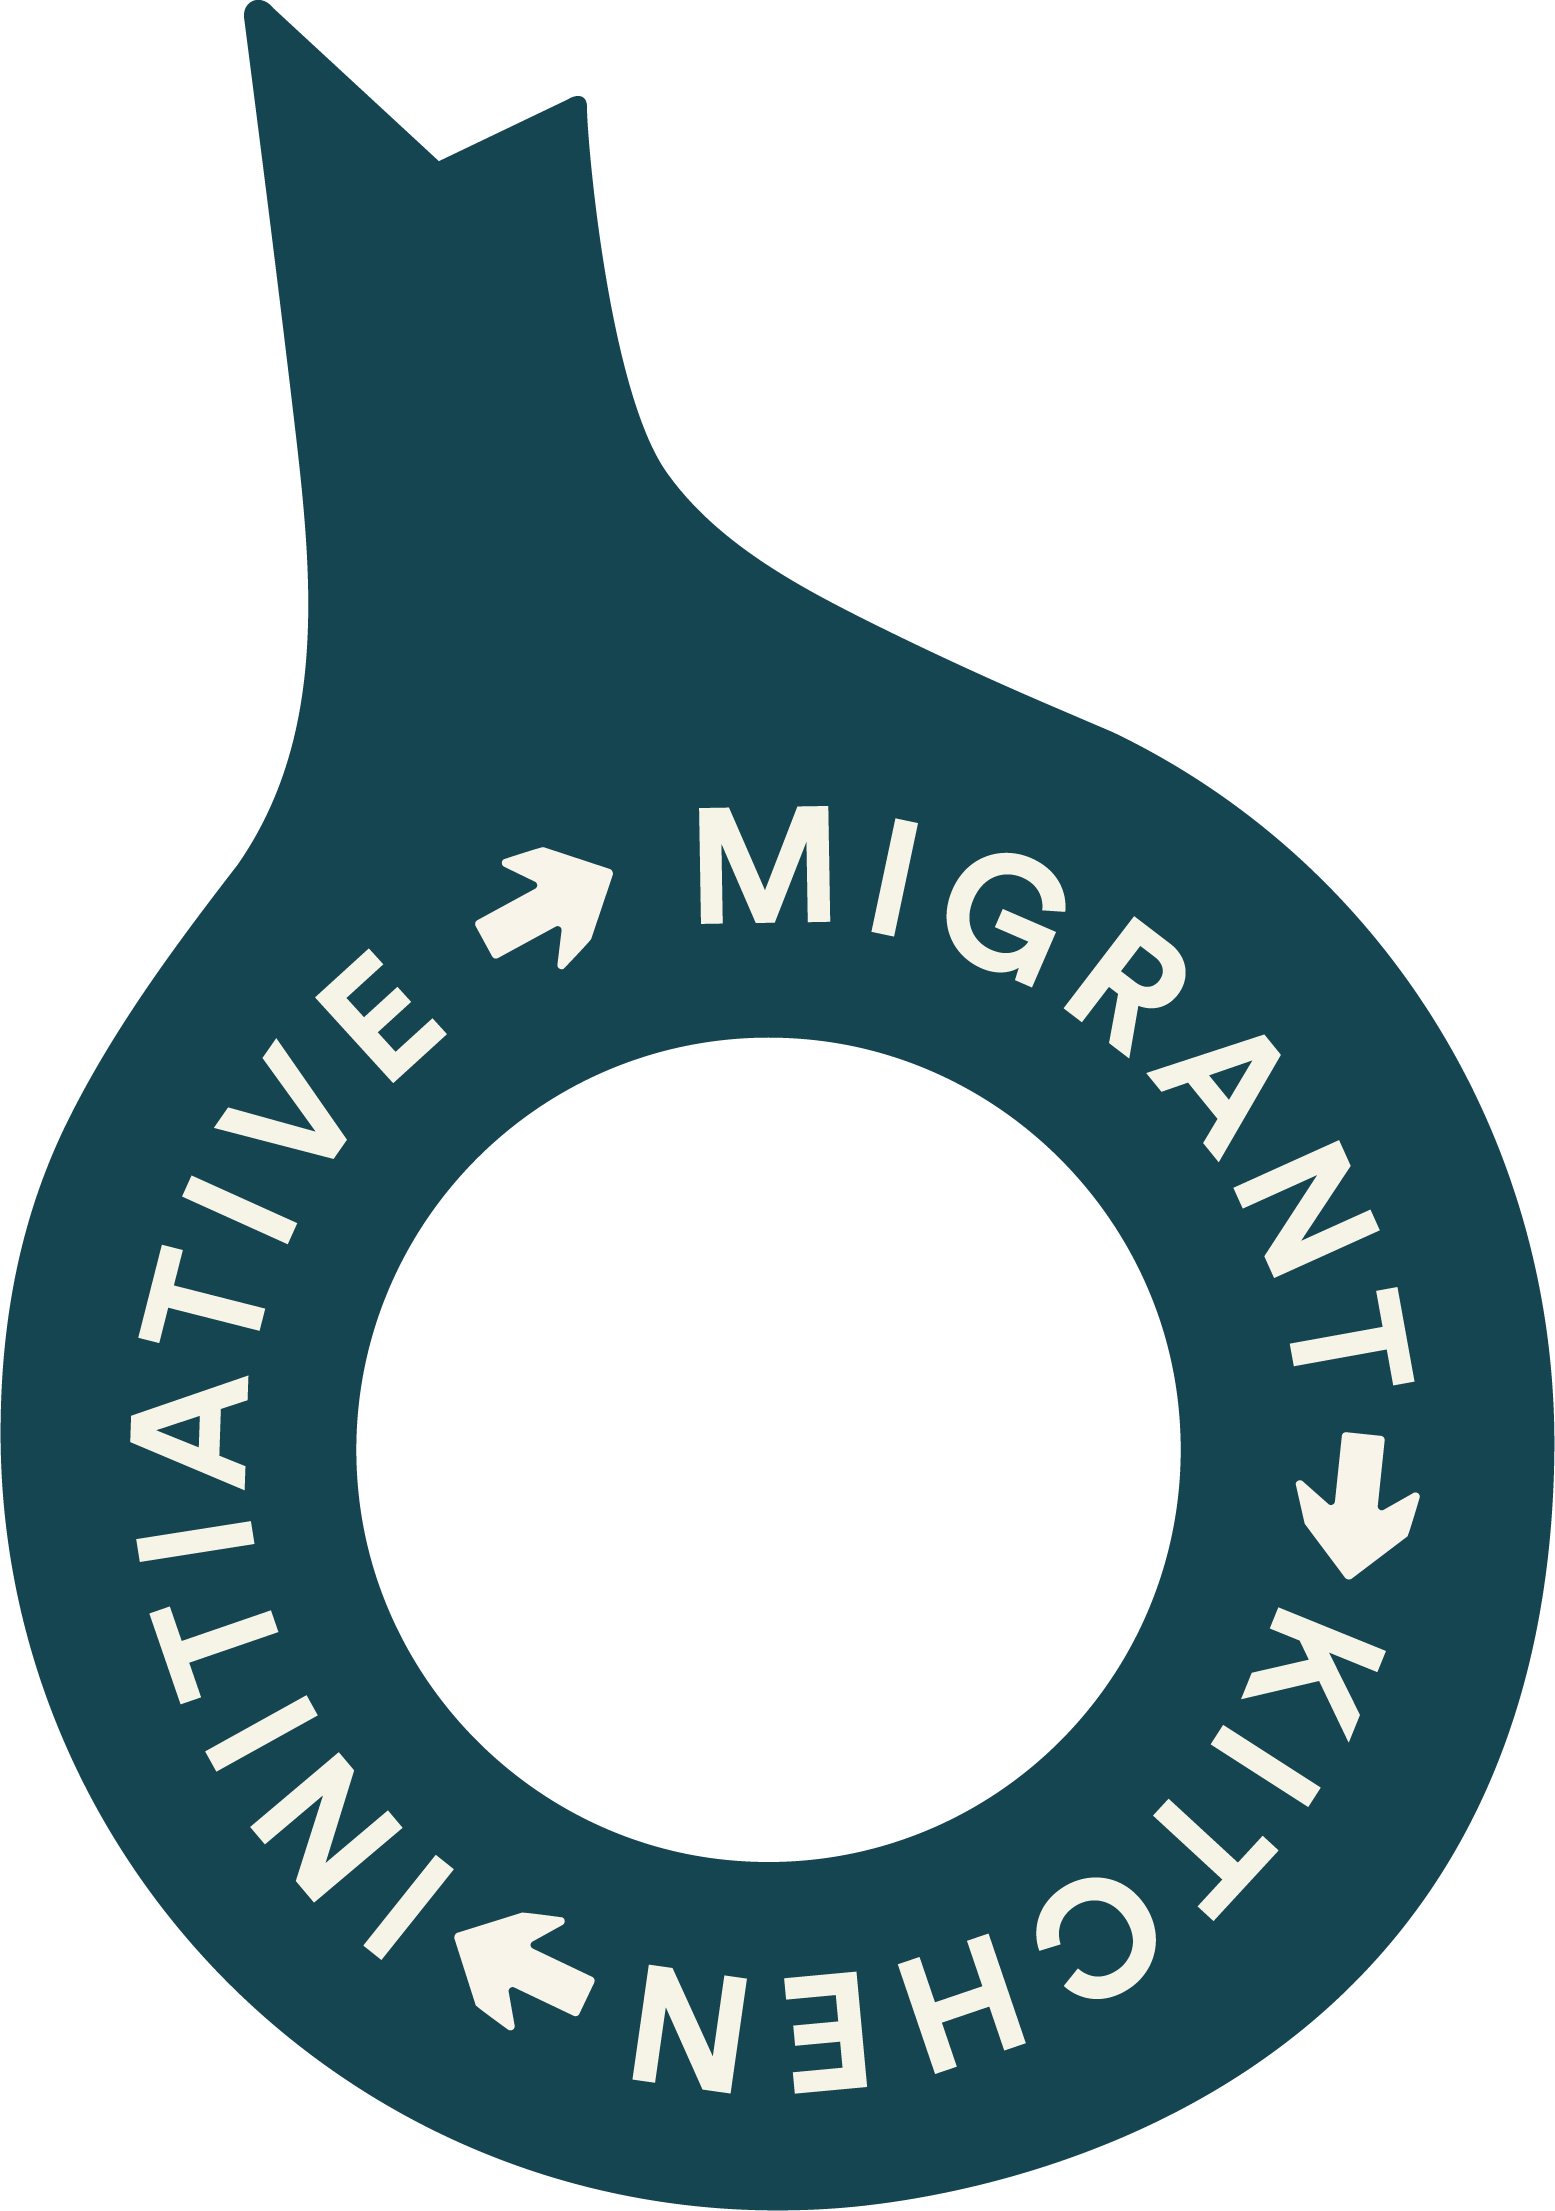 The Migrant Kitchen Initiative logo